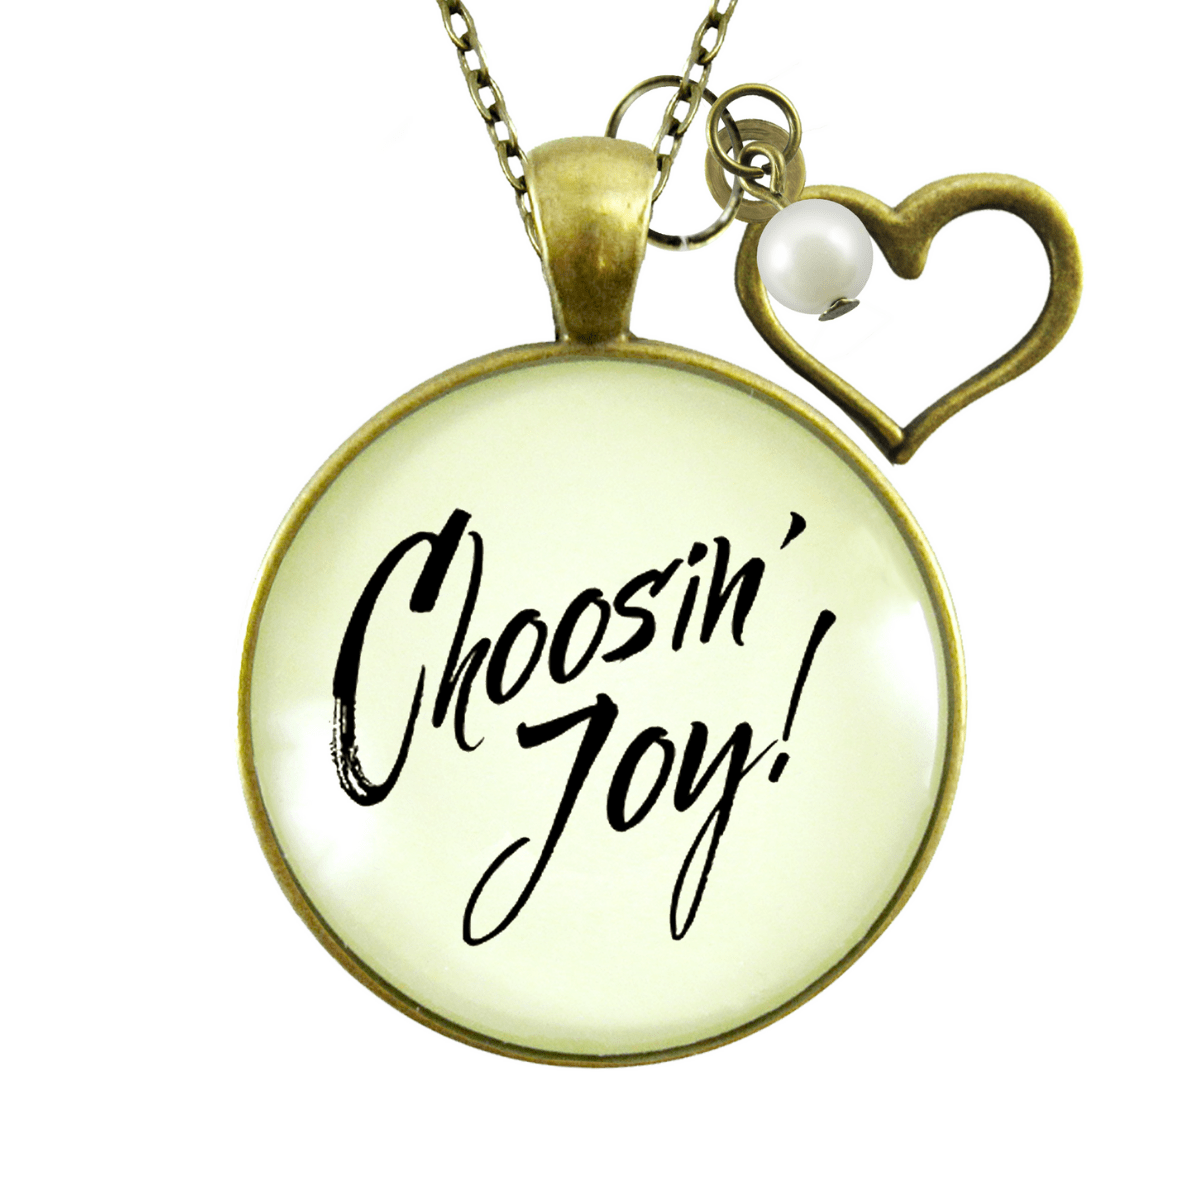 Choosing Joy Necklace Positive Life Mantra Jewelry Heart Charm - Gutsy Goodness;Choosing Joy Necklace Positive Life Mantra Jewelry Heart Charm - Gutsy Goodness Handmade Jewelry Gifts